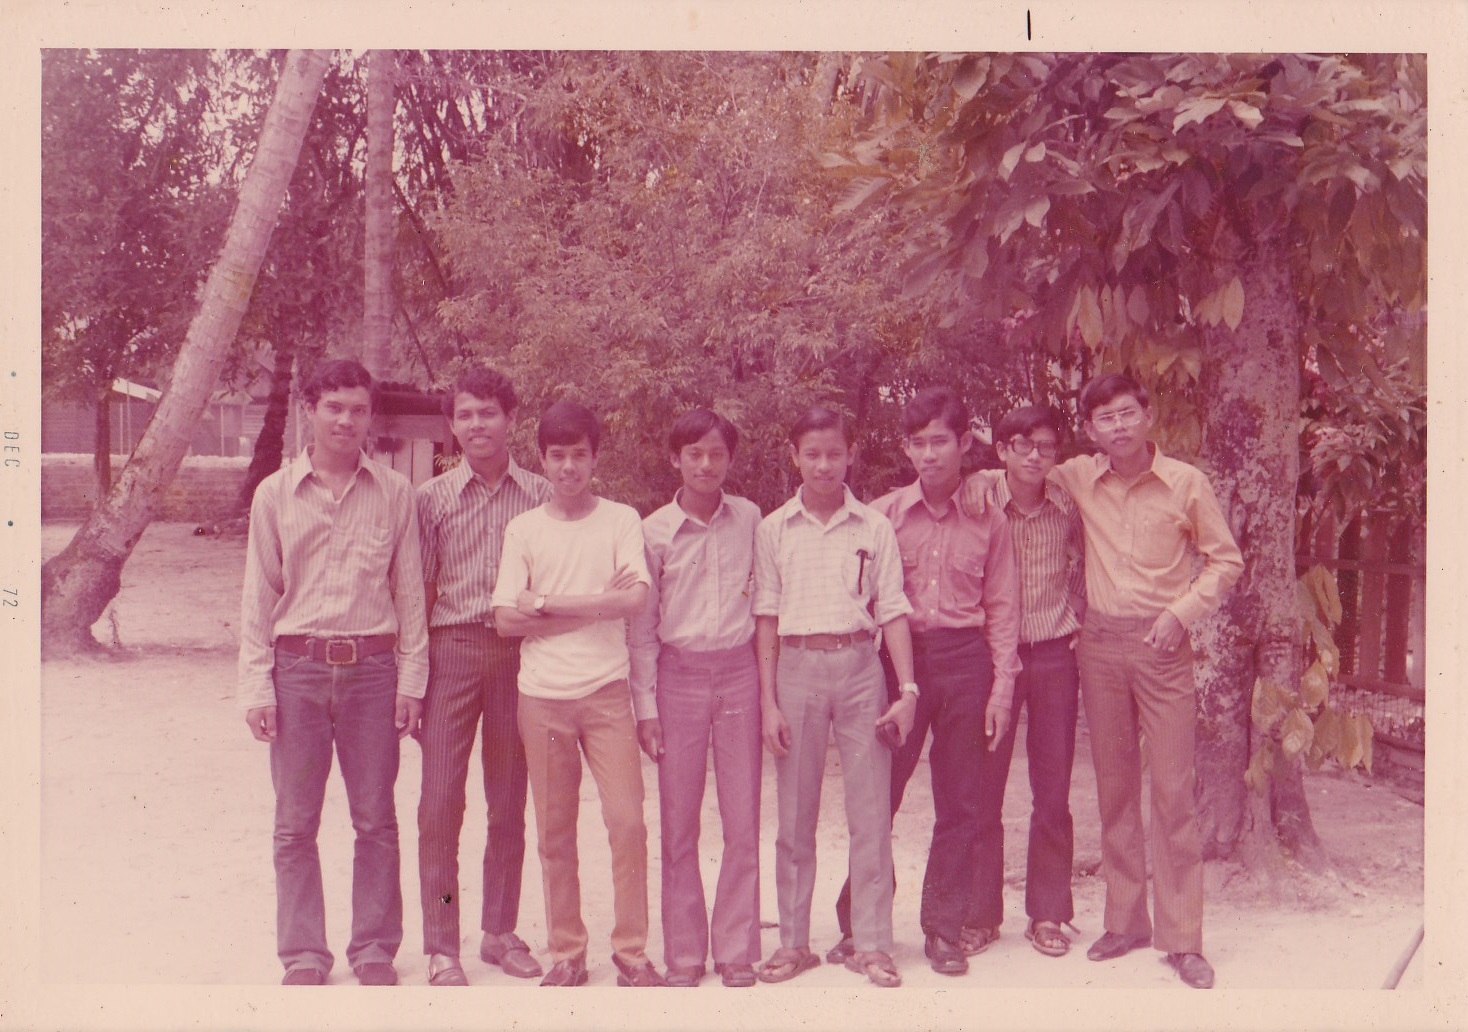 1971 kampung bahru, mior rosli, x ingat, syed Mohd Anuar, Mokhtar, Megat Shamsuddin, x ingat, Khairuddin, abdul Rahman